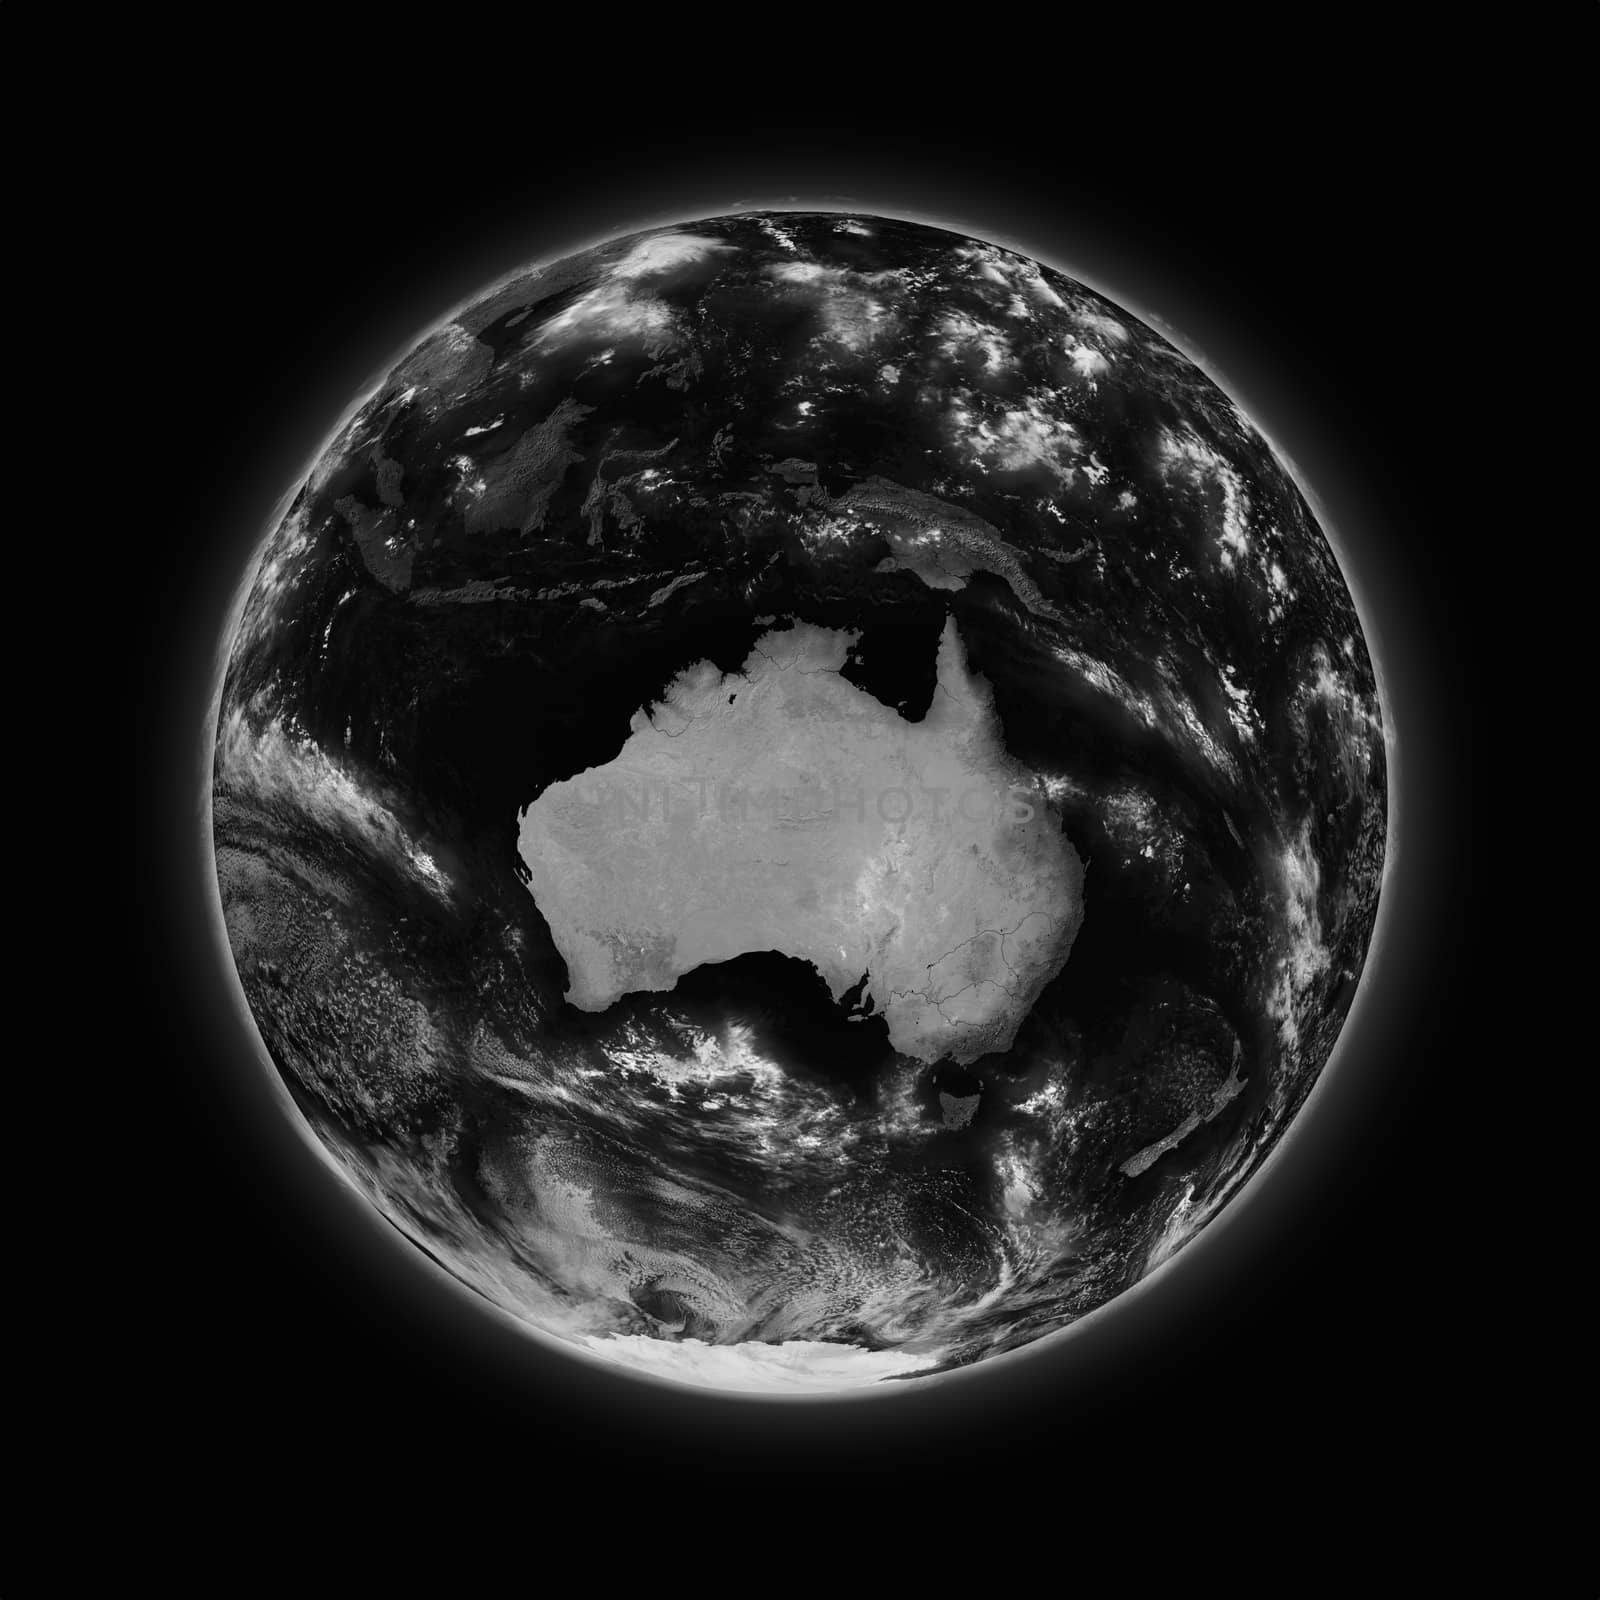 Australia on dark planet Earth by Harvepino